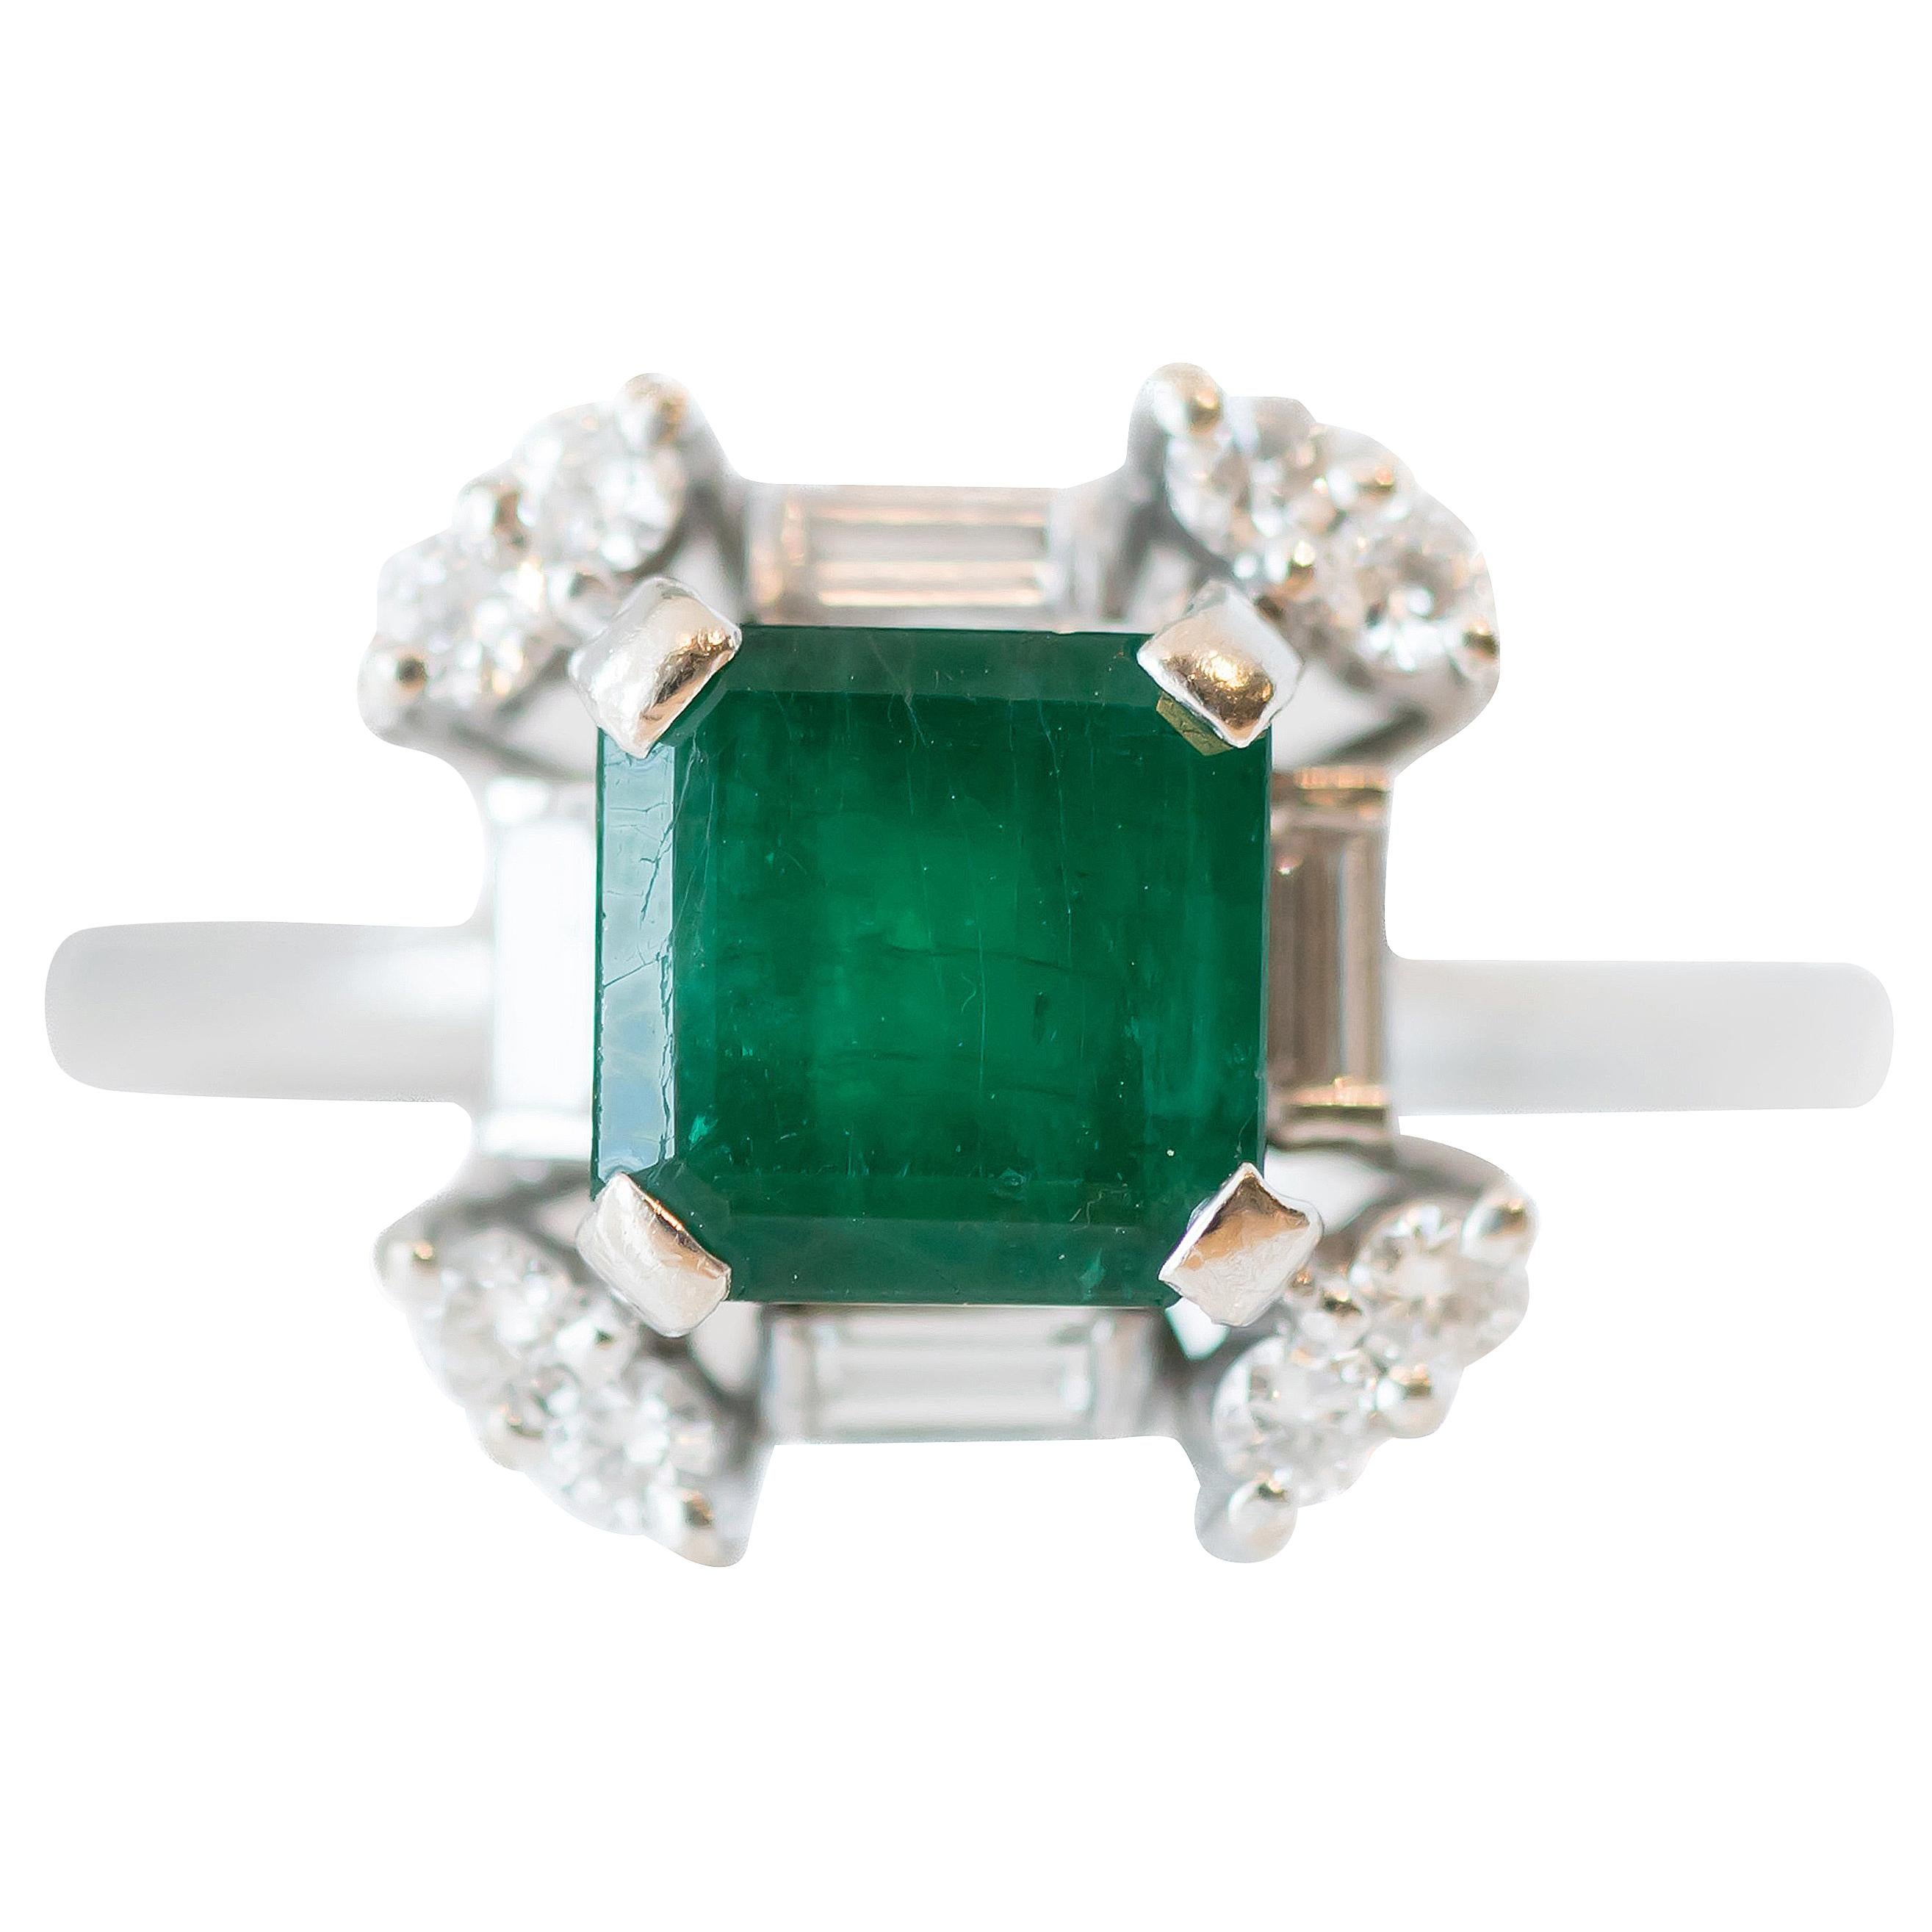 1950s 1.0 Carat Emerald, Diamond and 18 Karat White Gold Ring